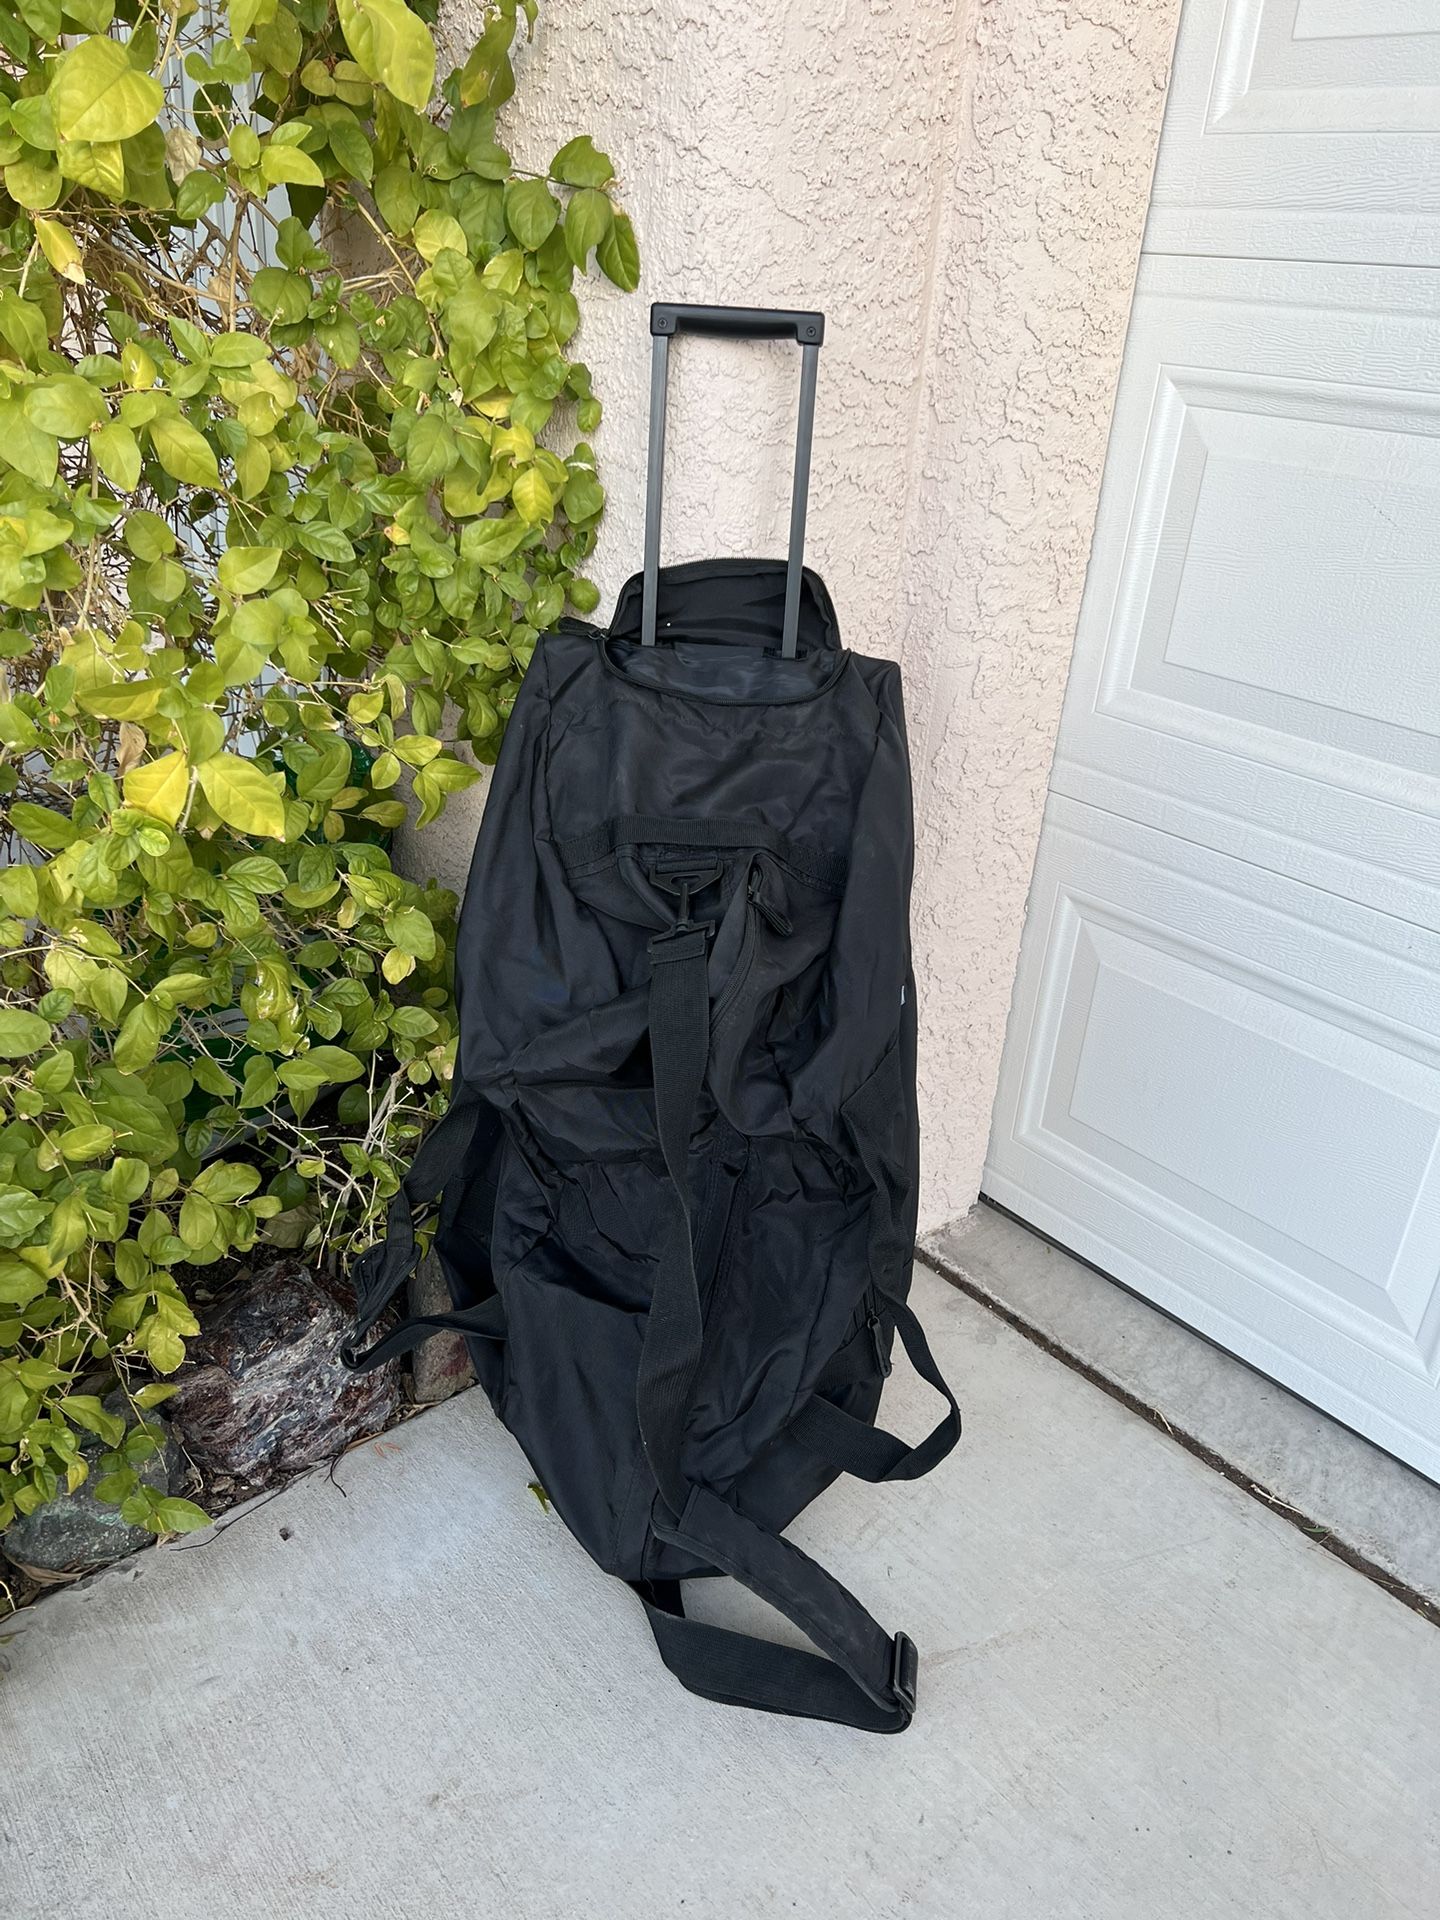 28”x14”x14” Large Rolling Duffle / Travel Shoulder Strap Bag